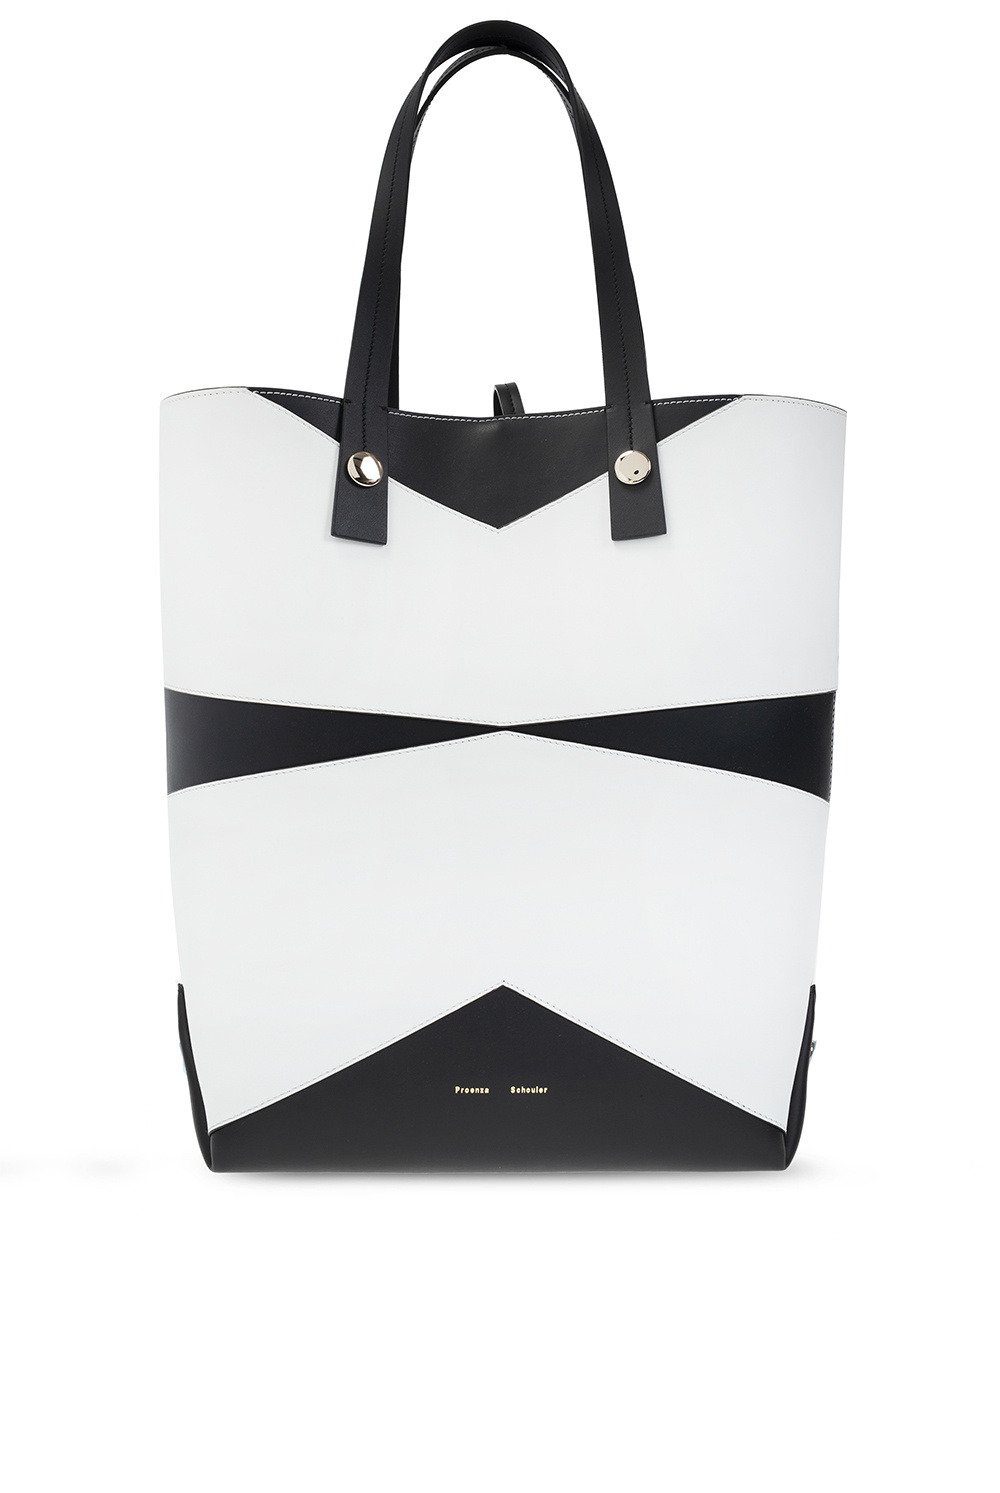 Proenza Schouler ‘North South’ shopper bag